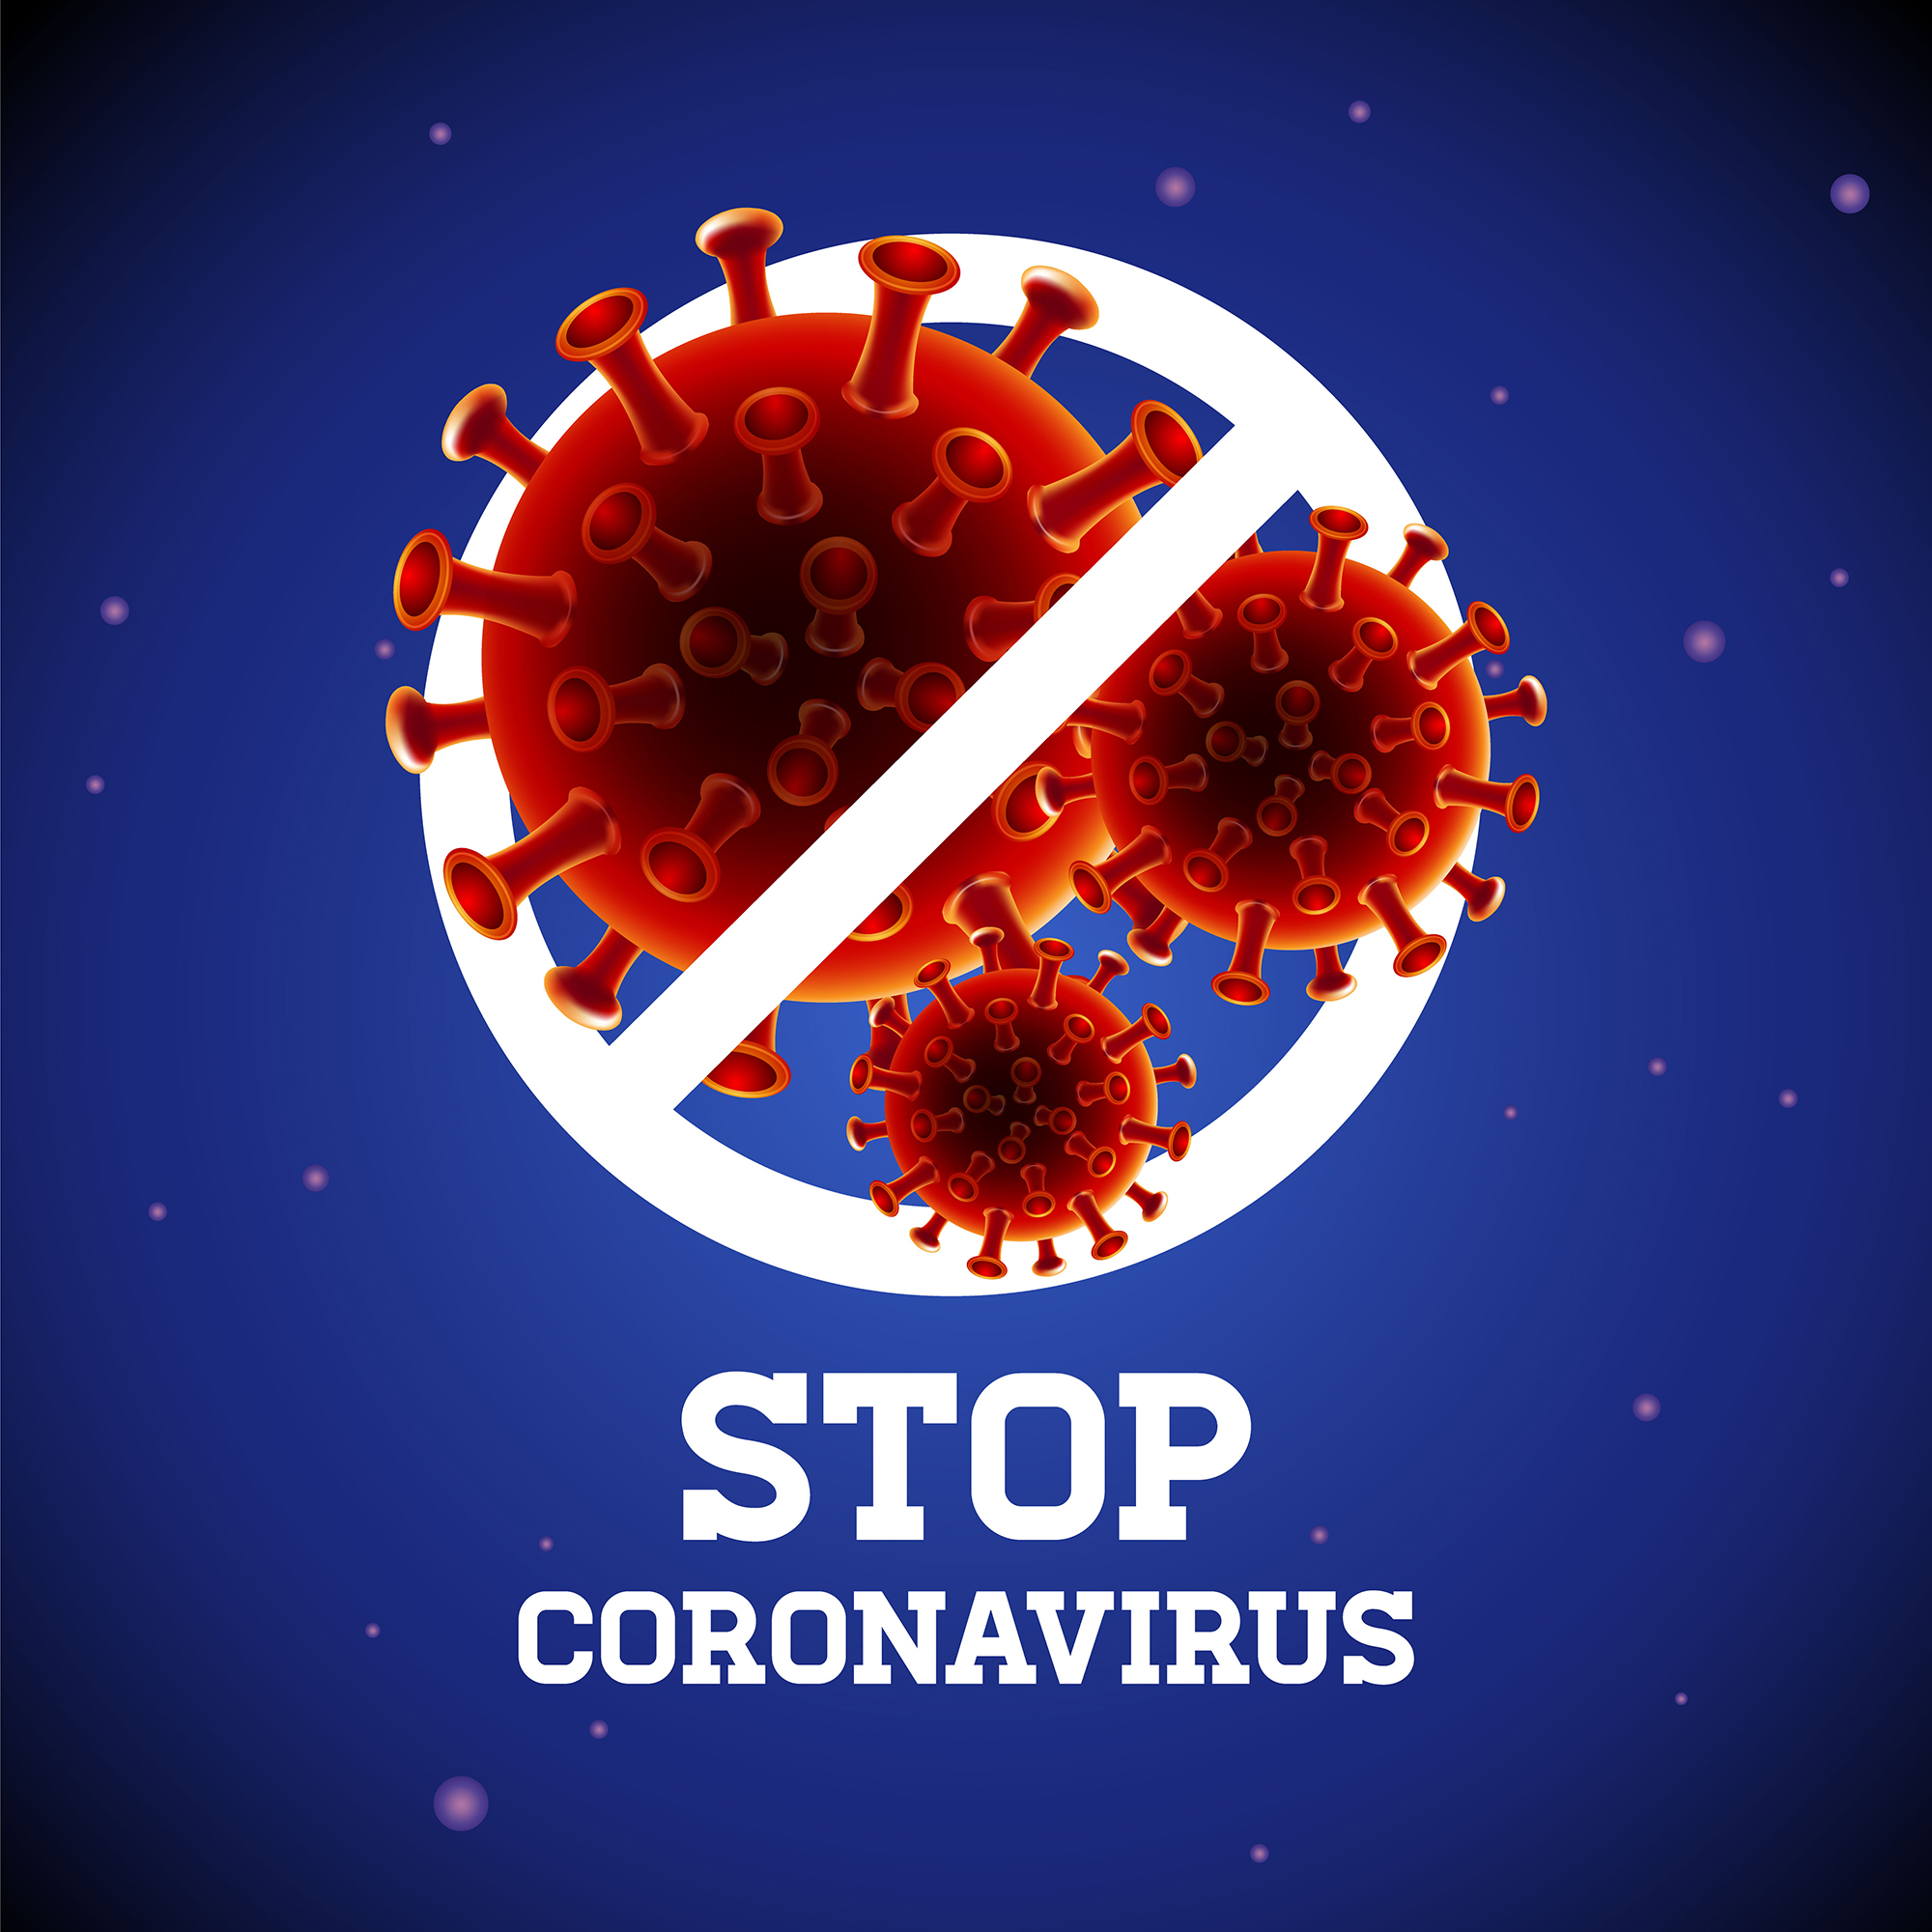 Stop Coronavirus, COVID-19 Poster - Download Free Vectors ...